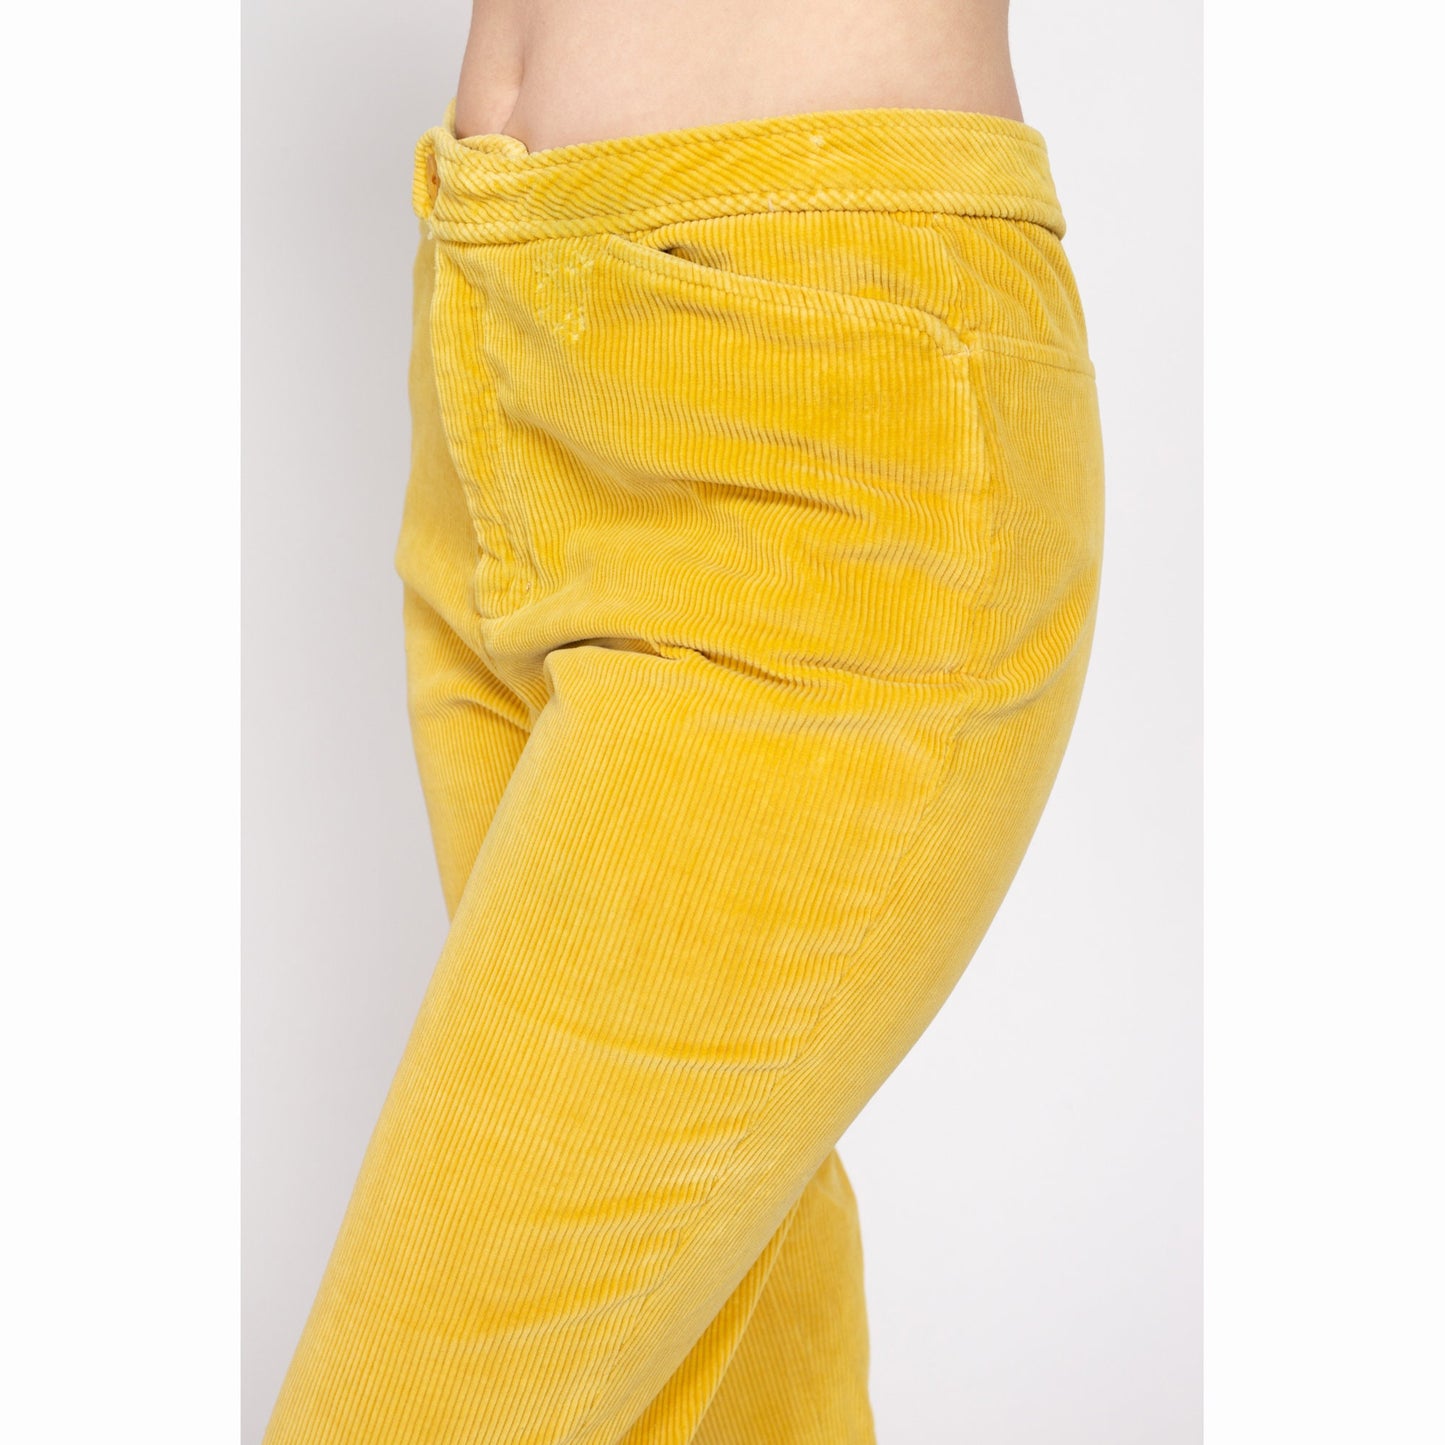 Medium 70s Yellow Corduroy Kick Flare Pants | Vintage Cords Retro High Waisted Trousers